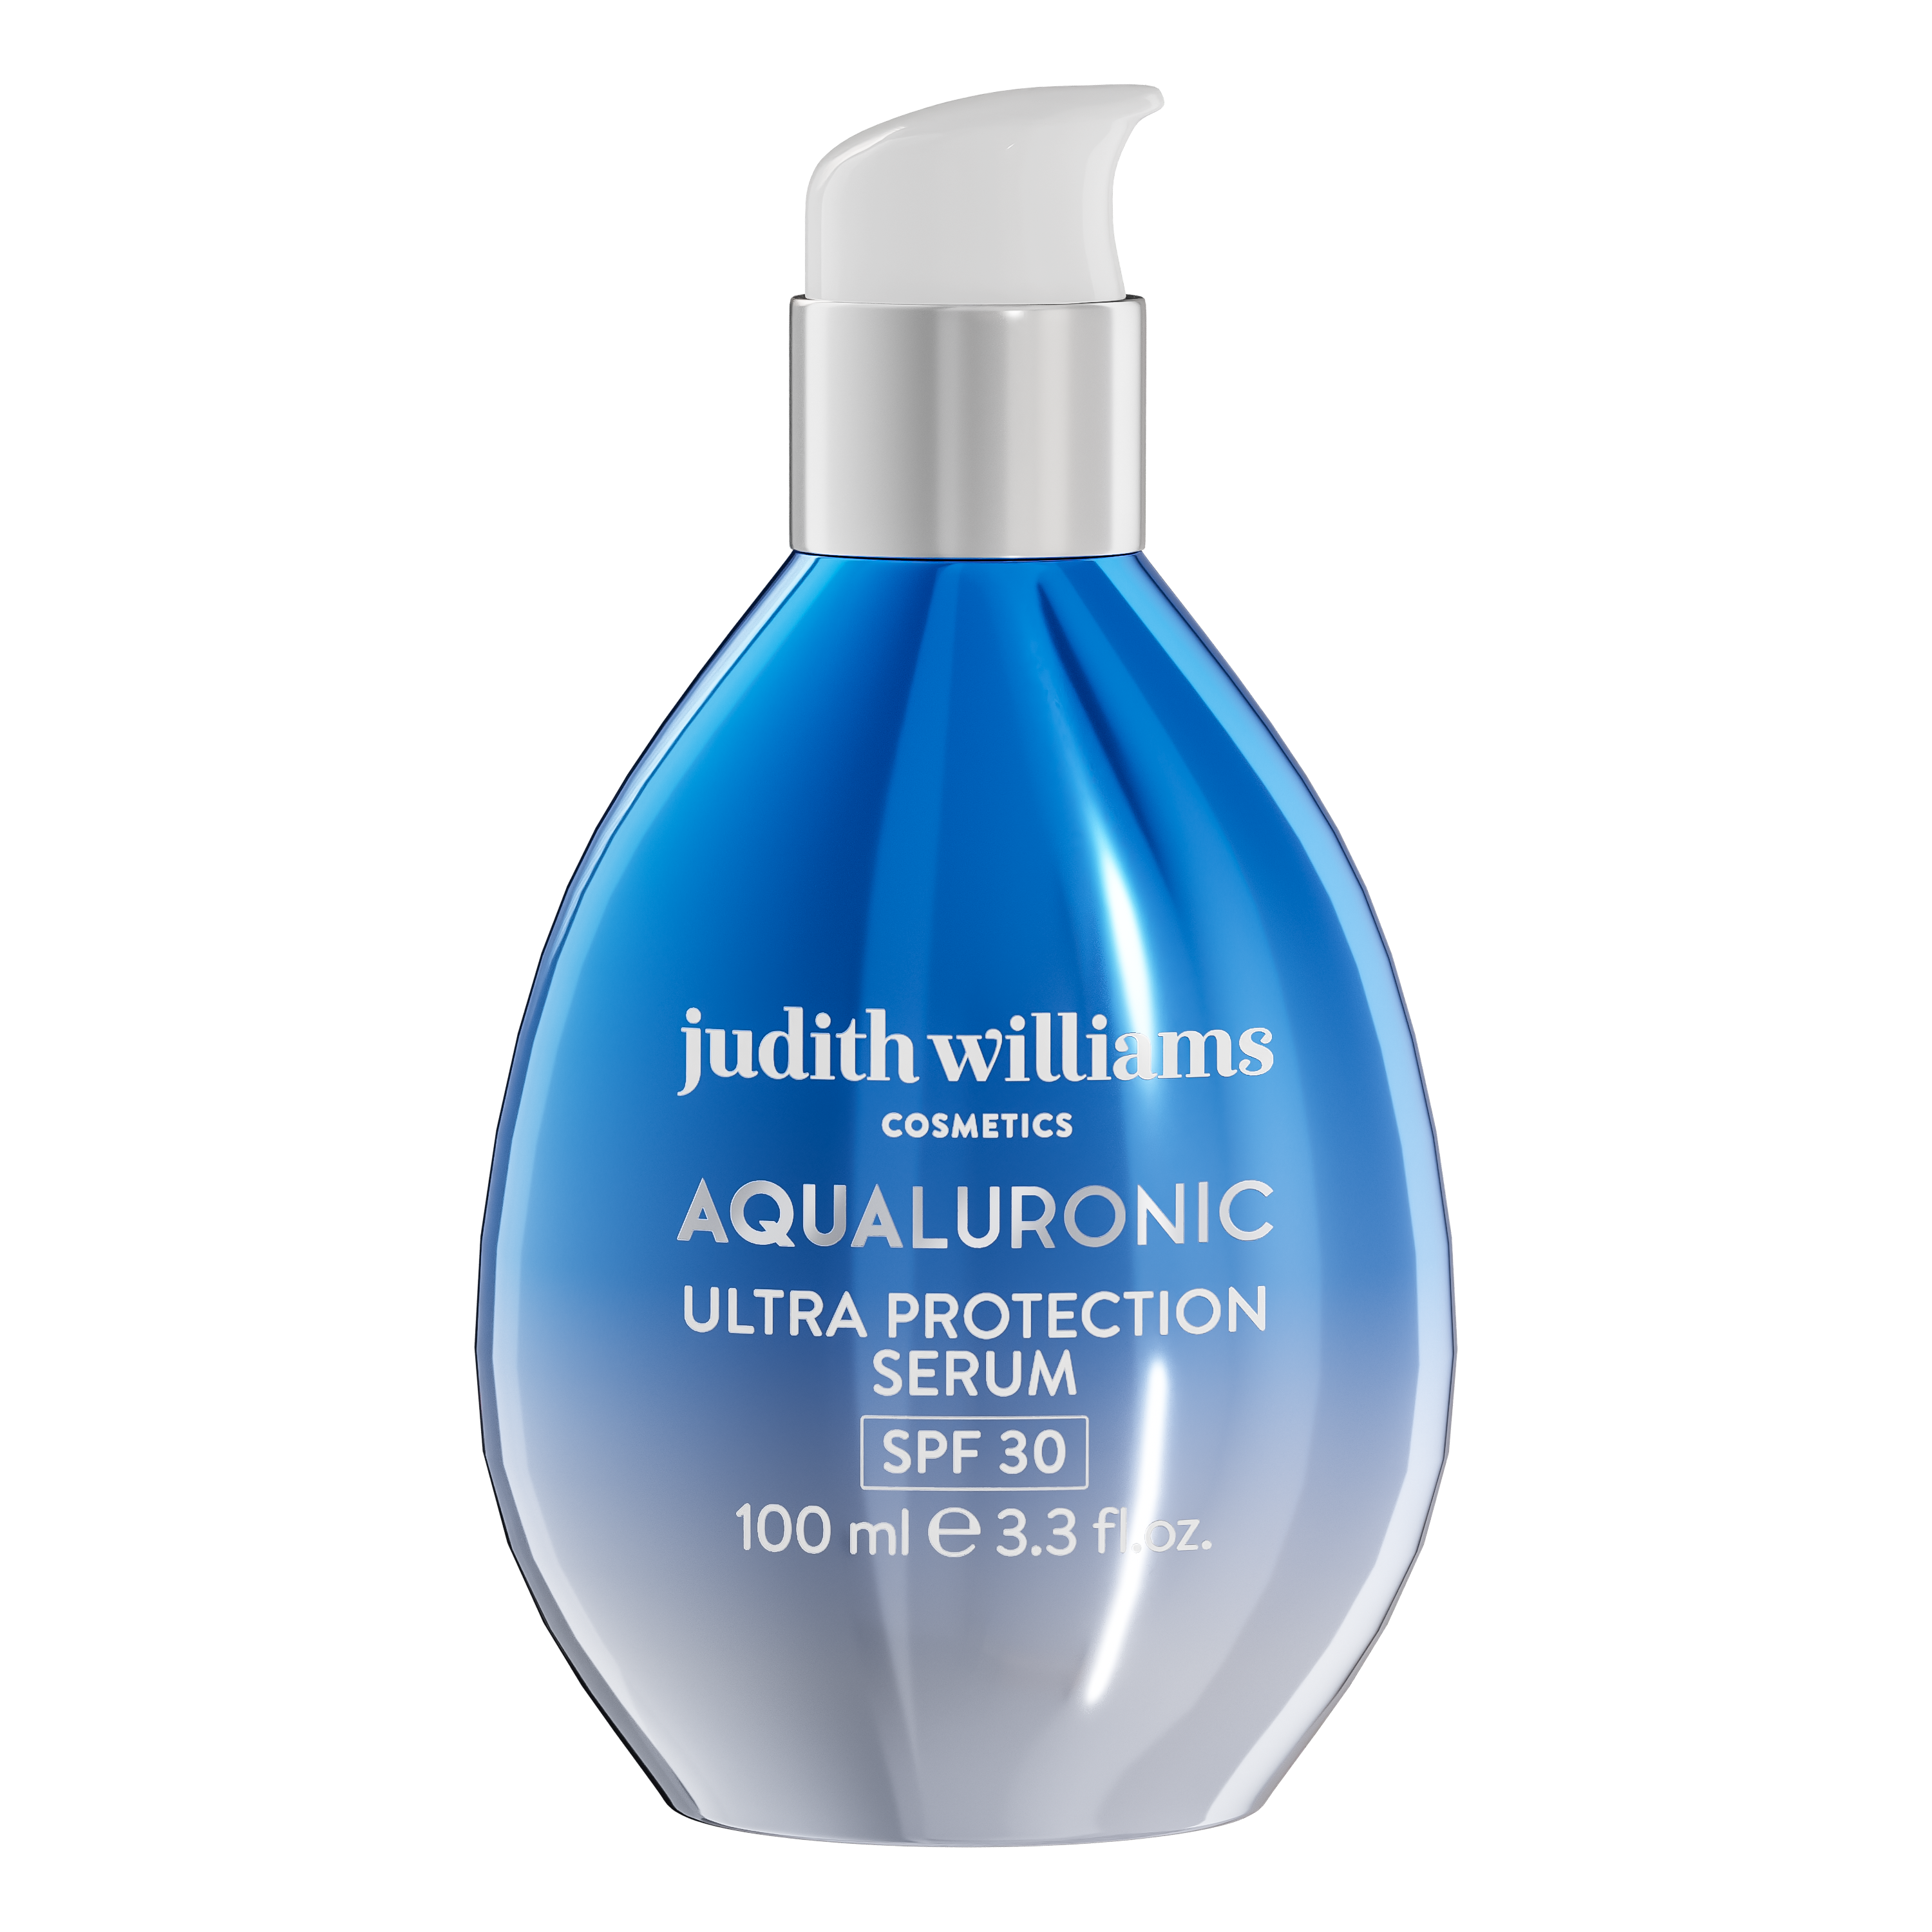 Gesichtsserum | Aqualuronic | Ultra Protection Serum SPF 30 | Judith Williams